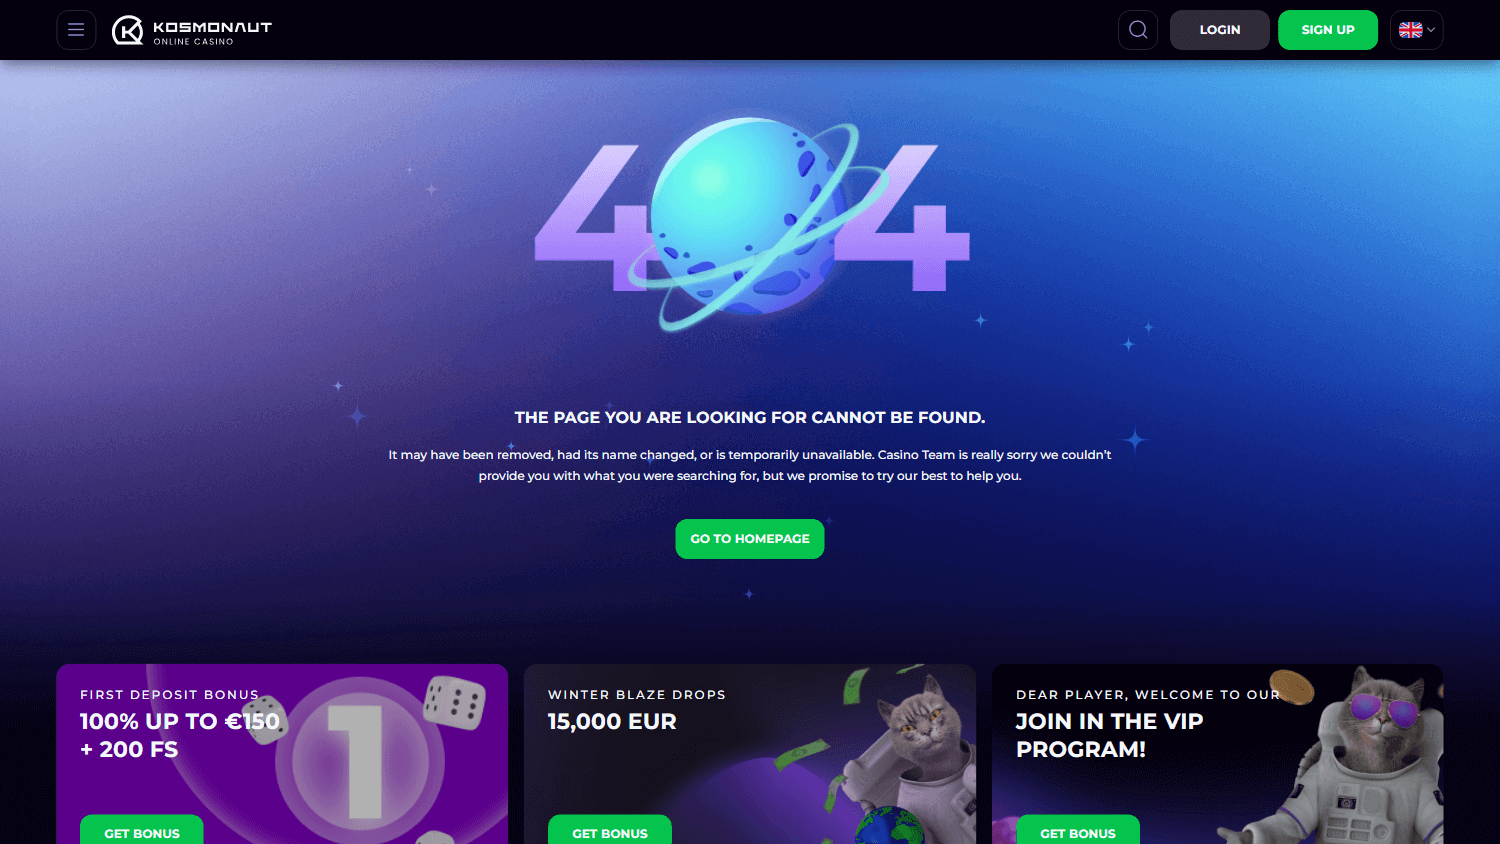 kosmonaut_casino_promotions_desktop